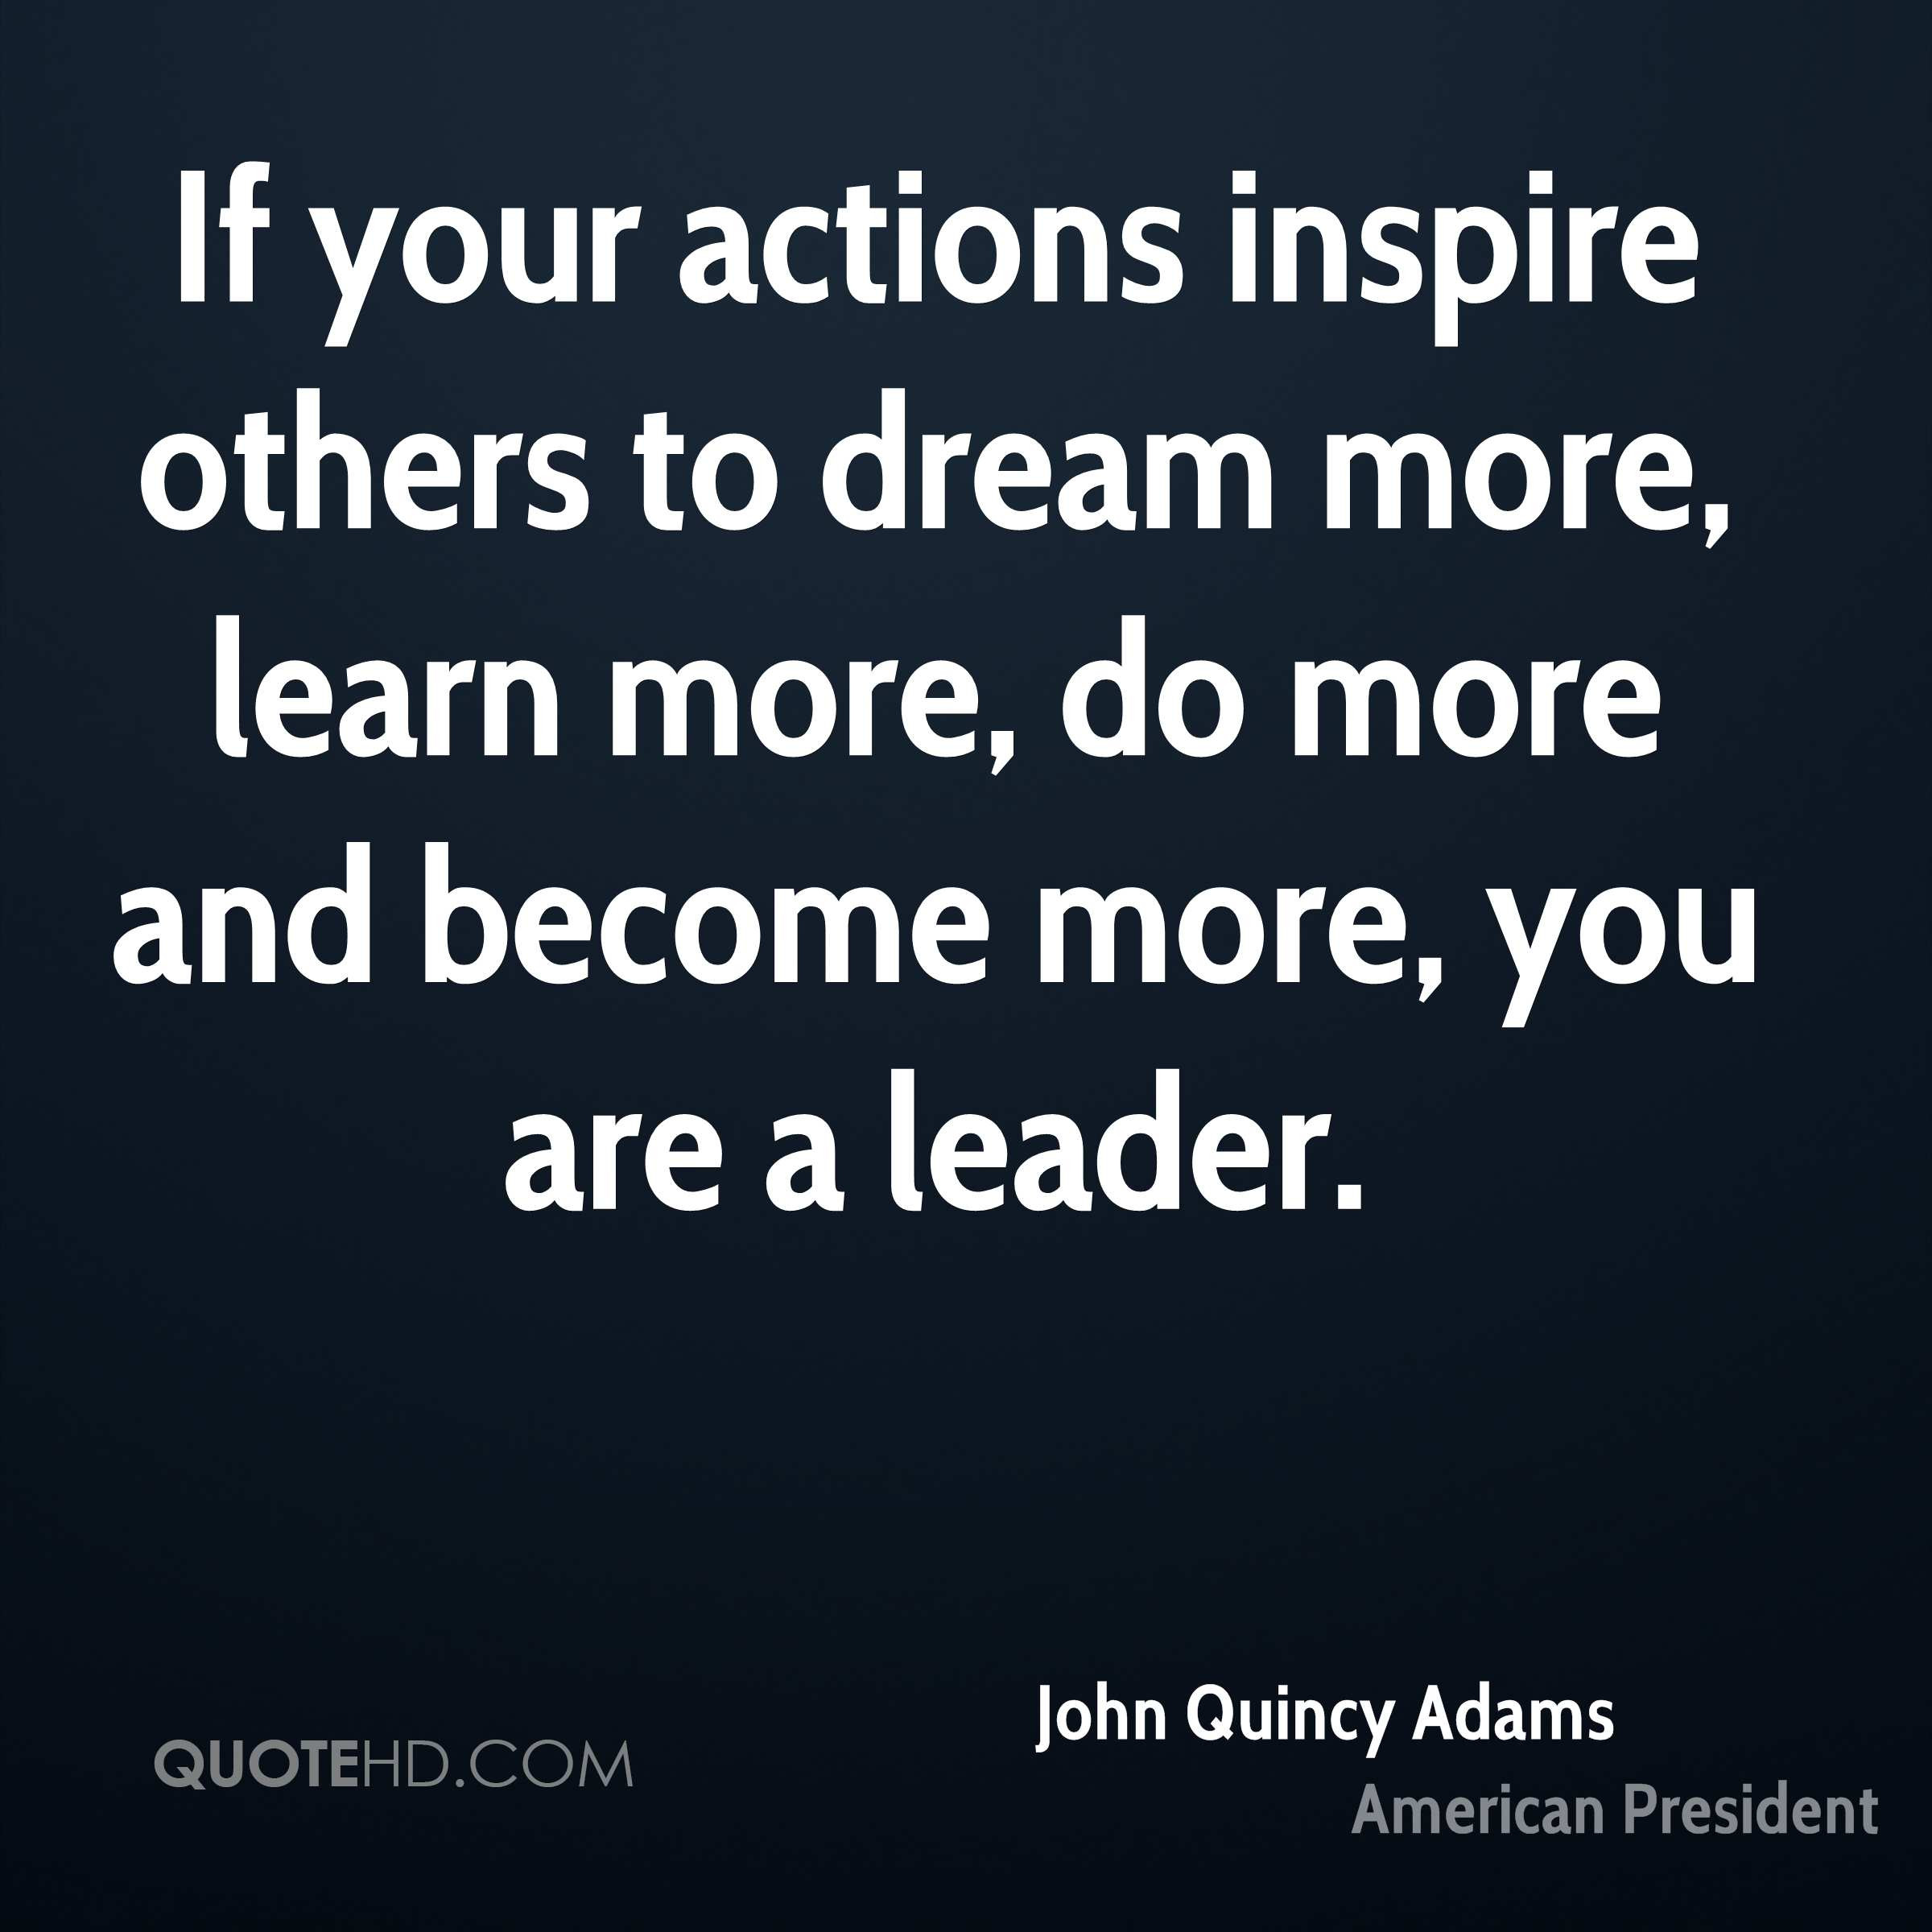 John Adams Quotes On Leadership
 John Quincy Adams Quotes